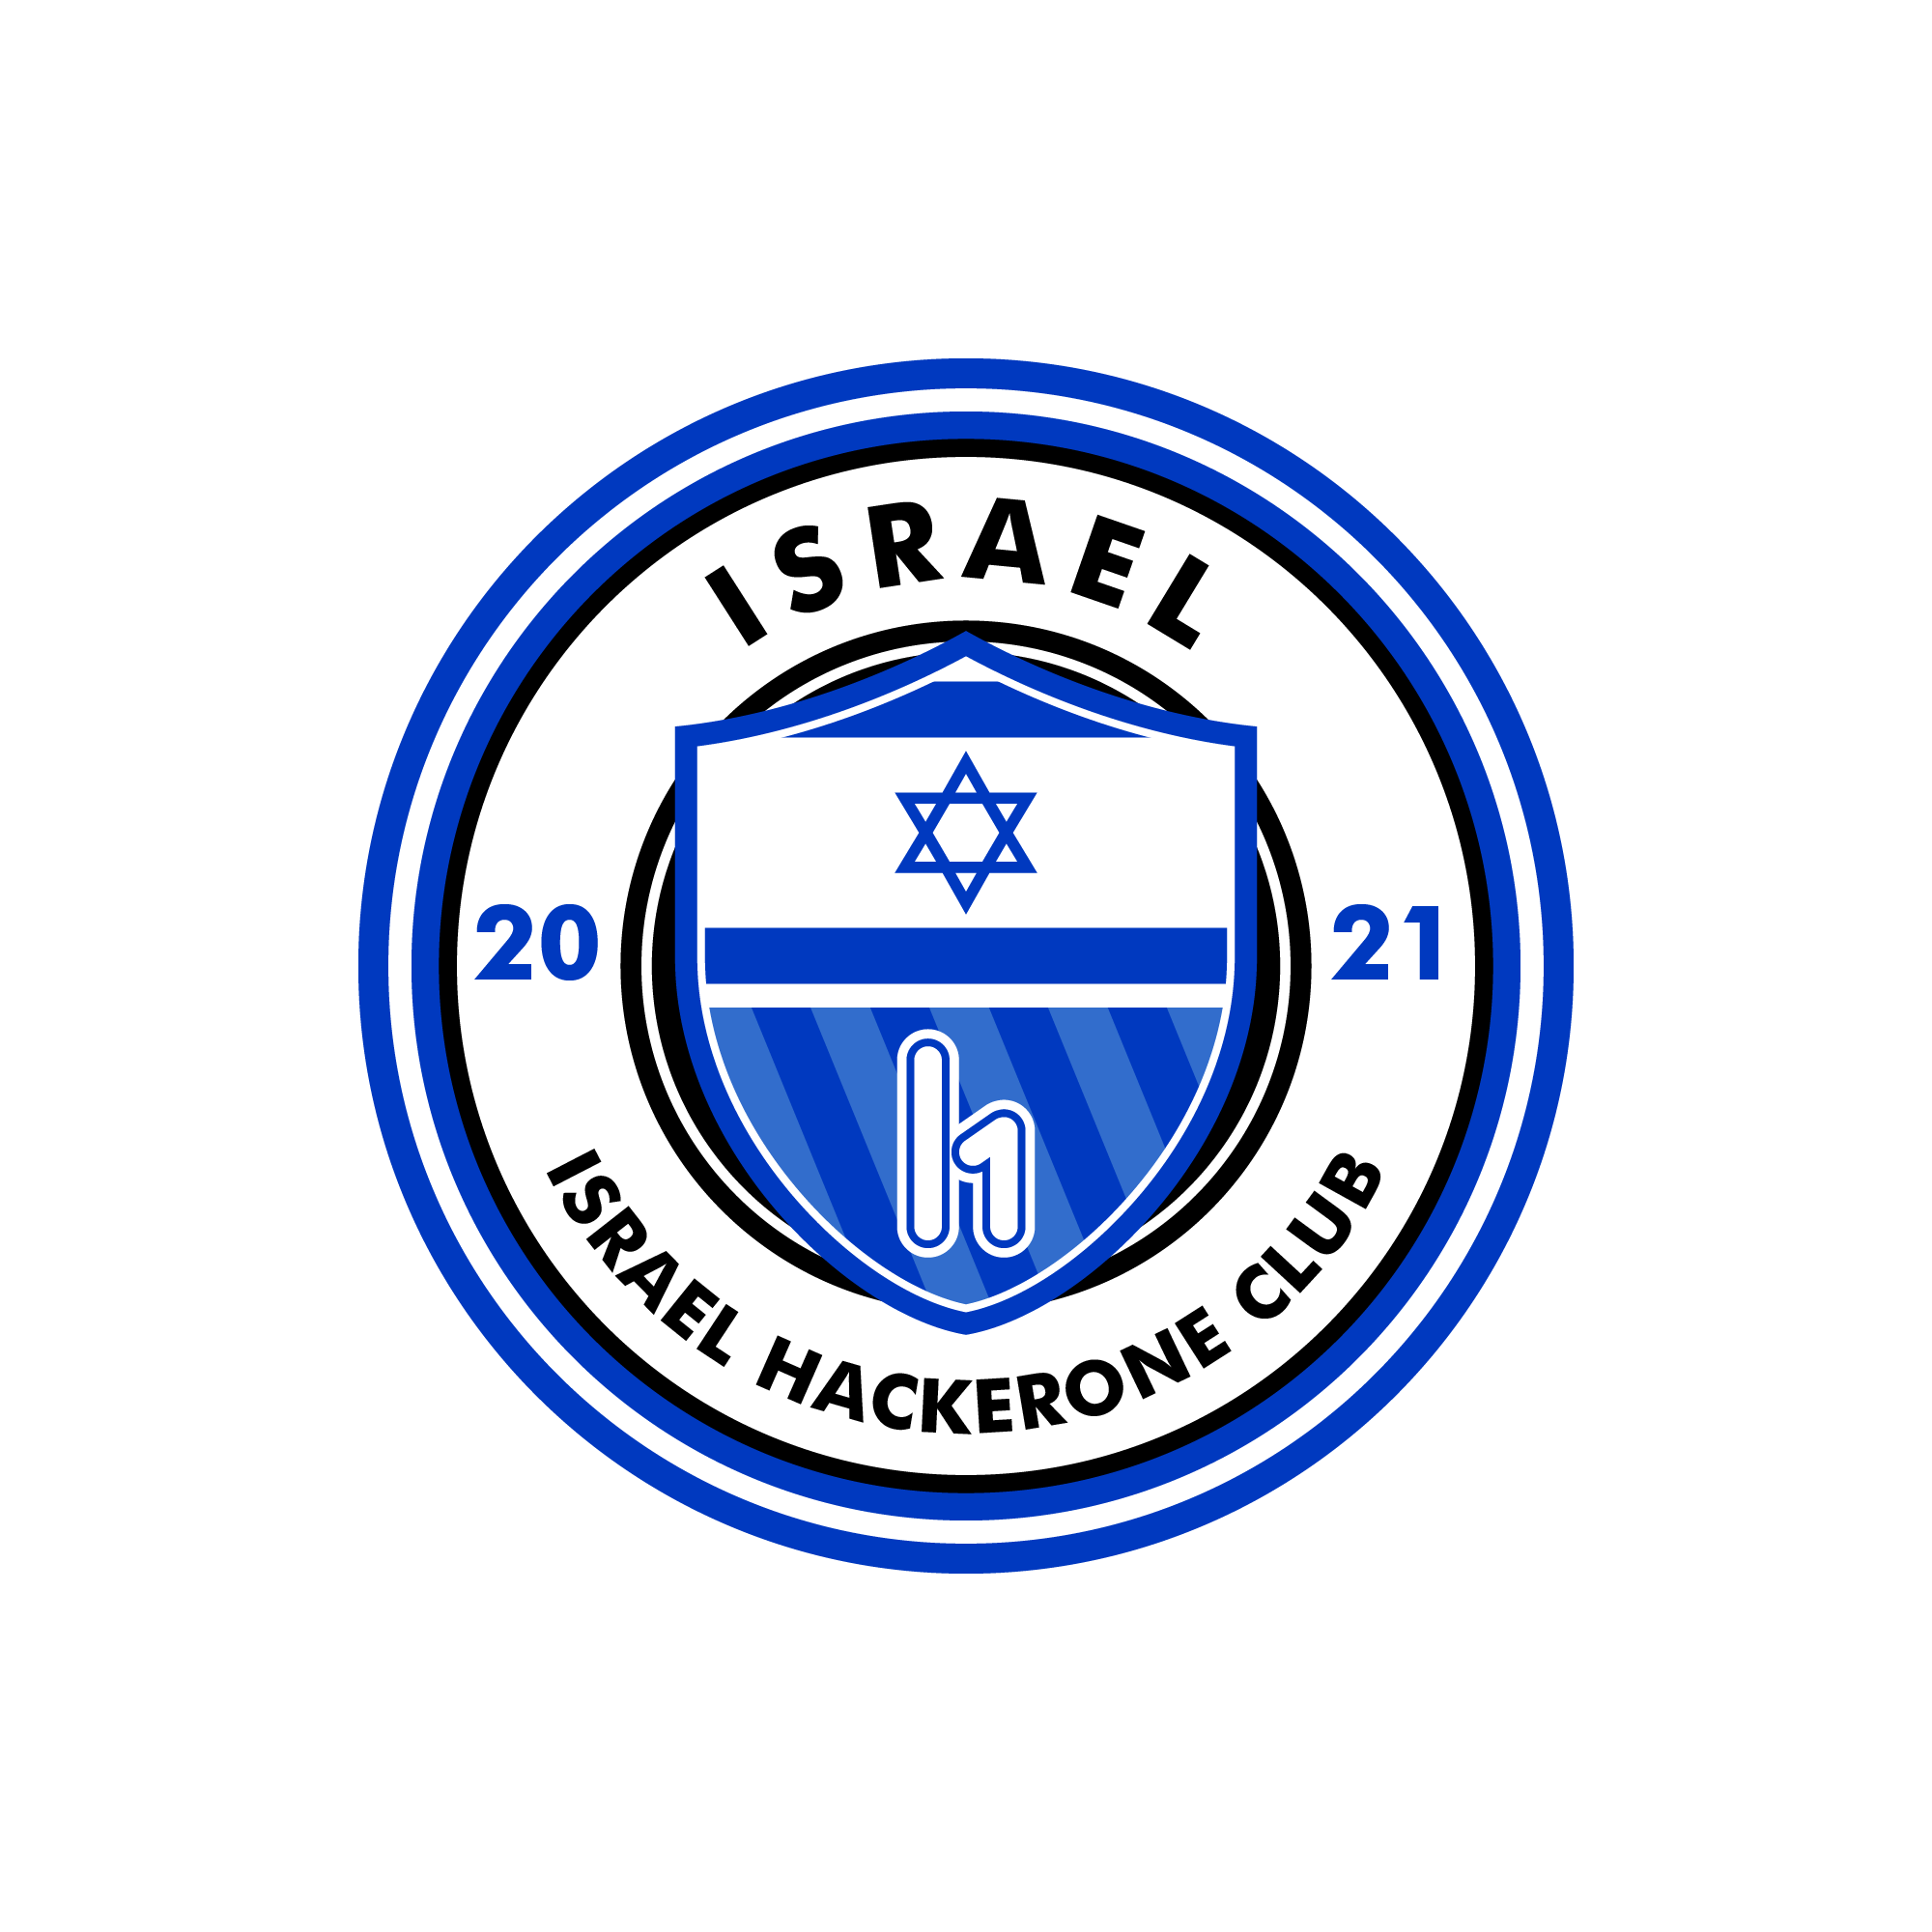 Israel Ambassador Club logo